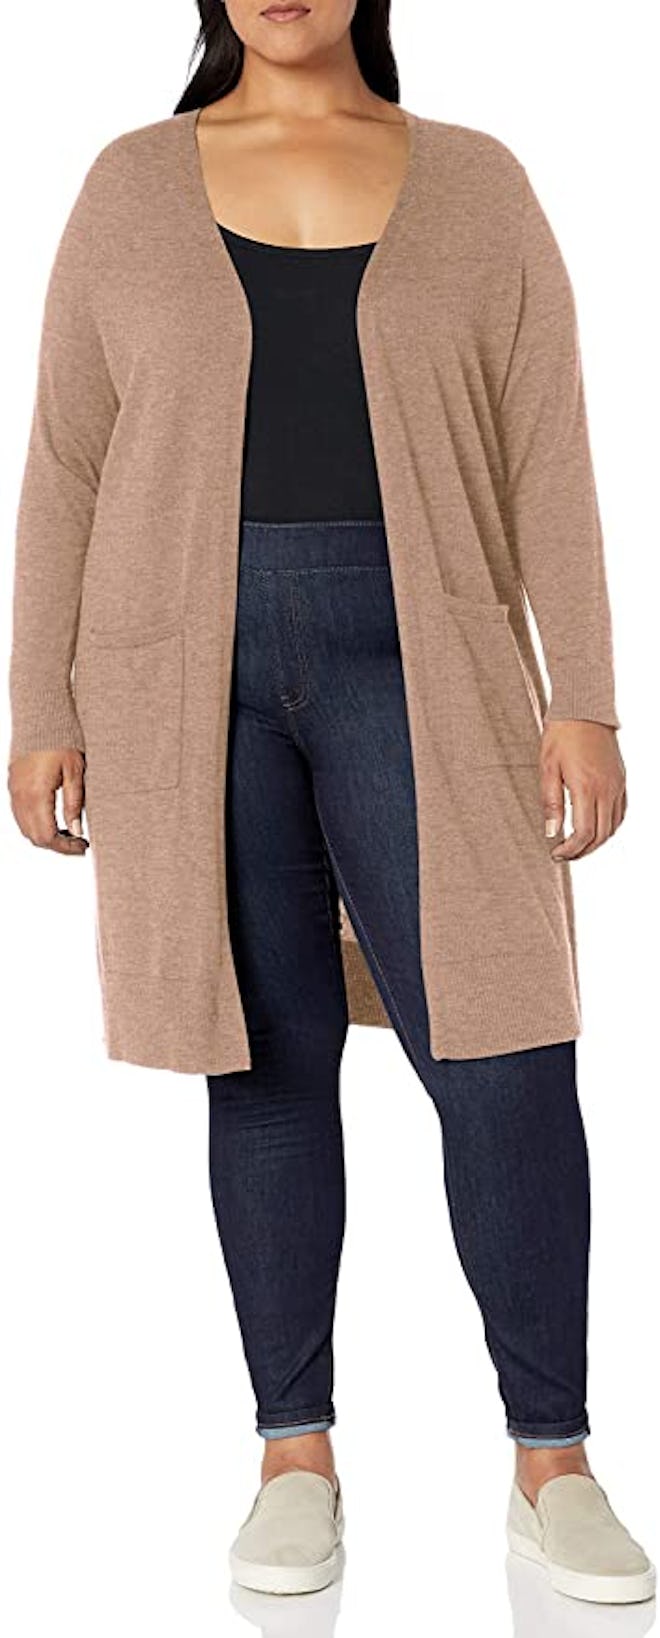 Amazon Essentials Lightweight Long Cardigan